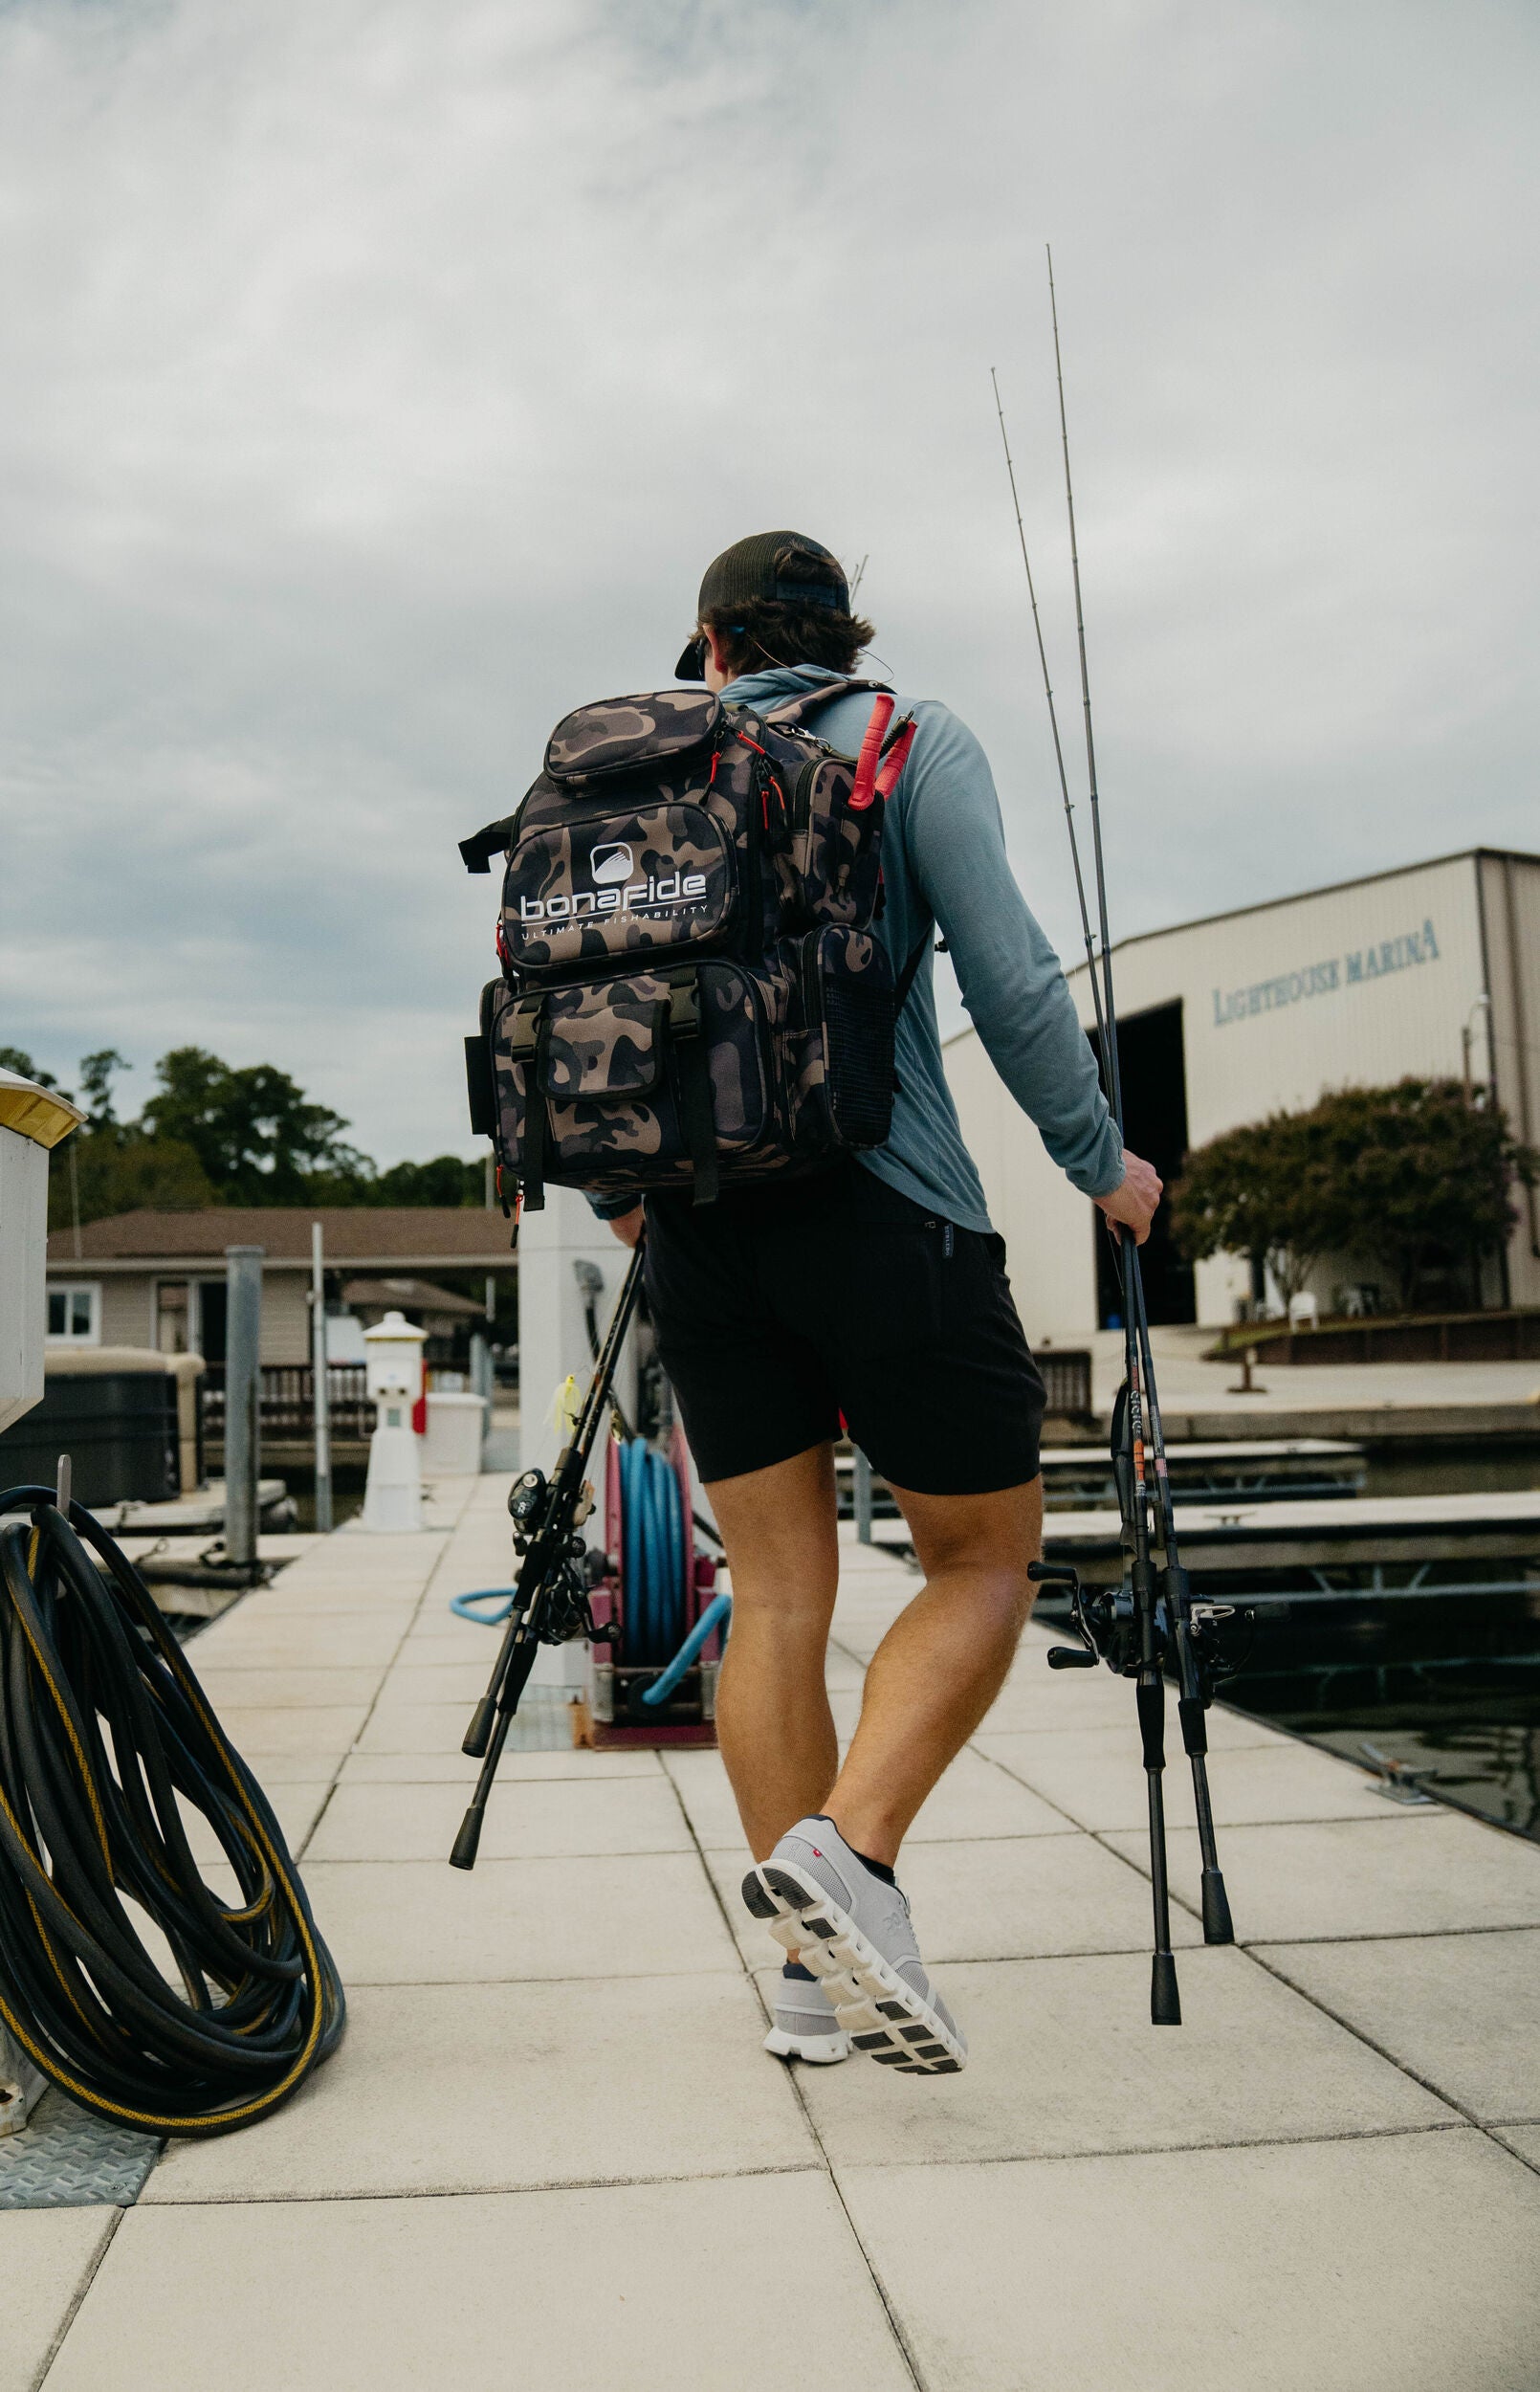 Bonafide Sideline Fishing Bag - Backpack with Three 3600 Boxes